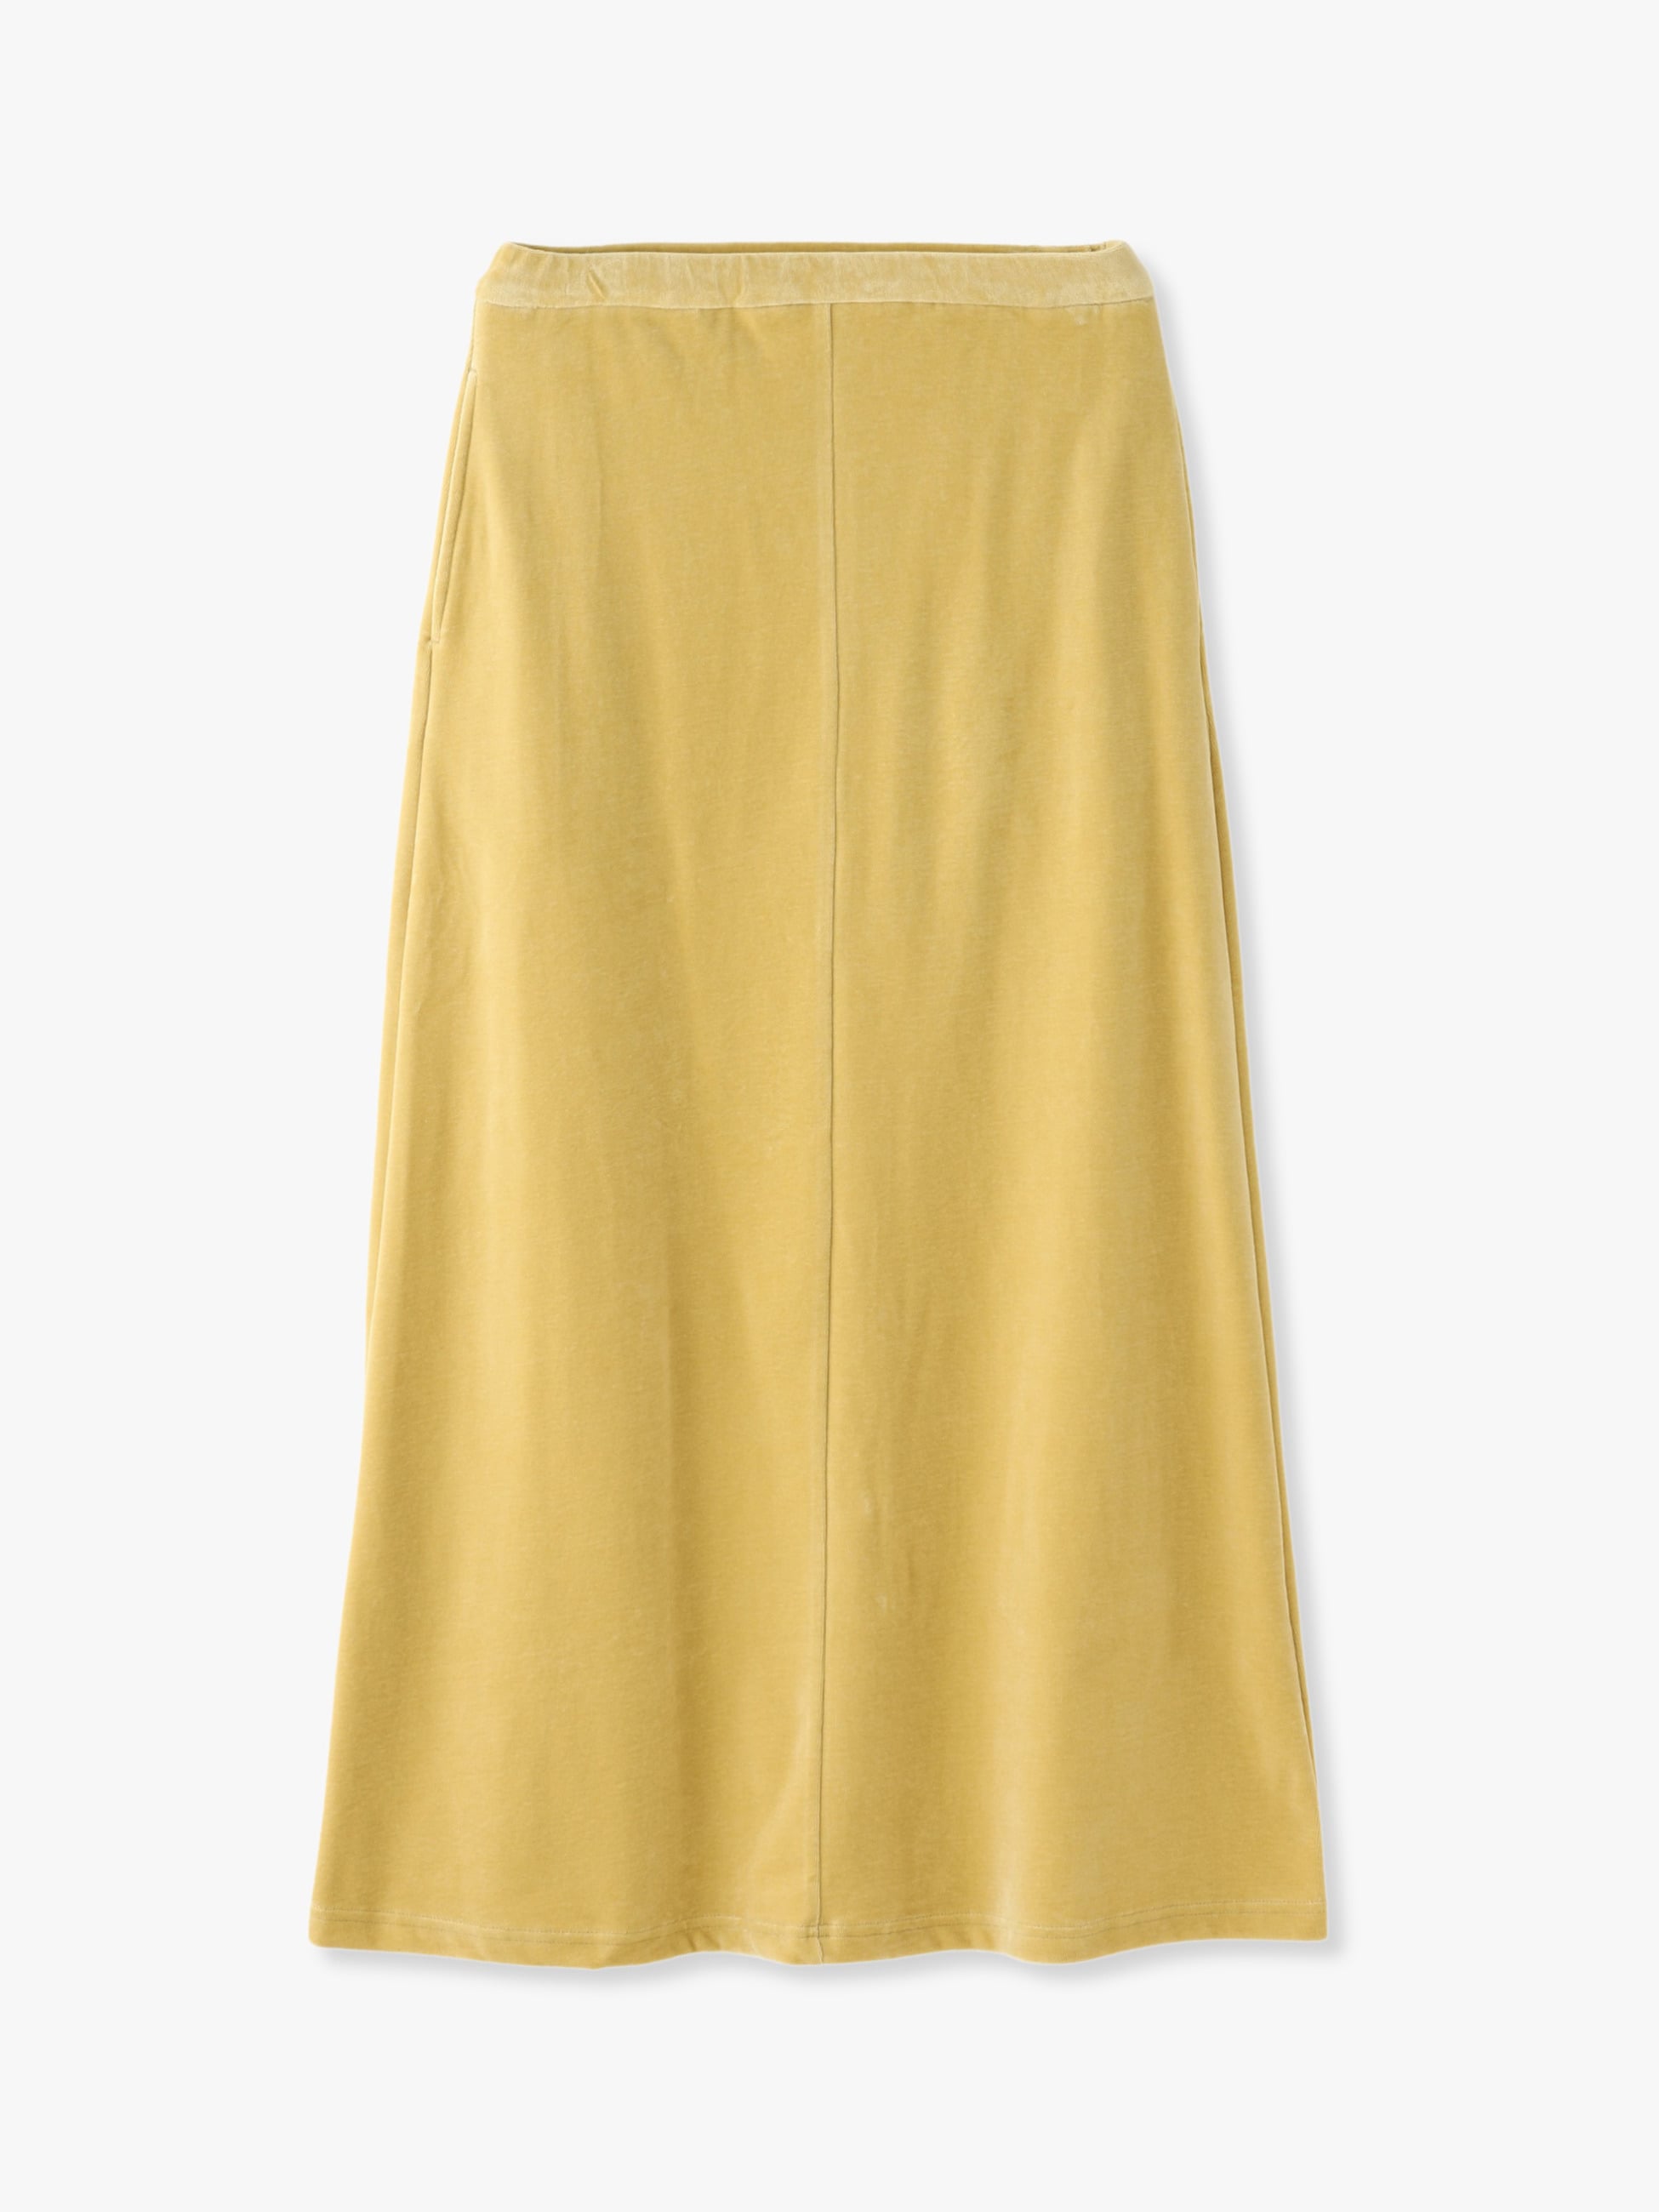 Velour Skirt 詳細画像 yellow 5